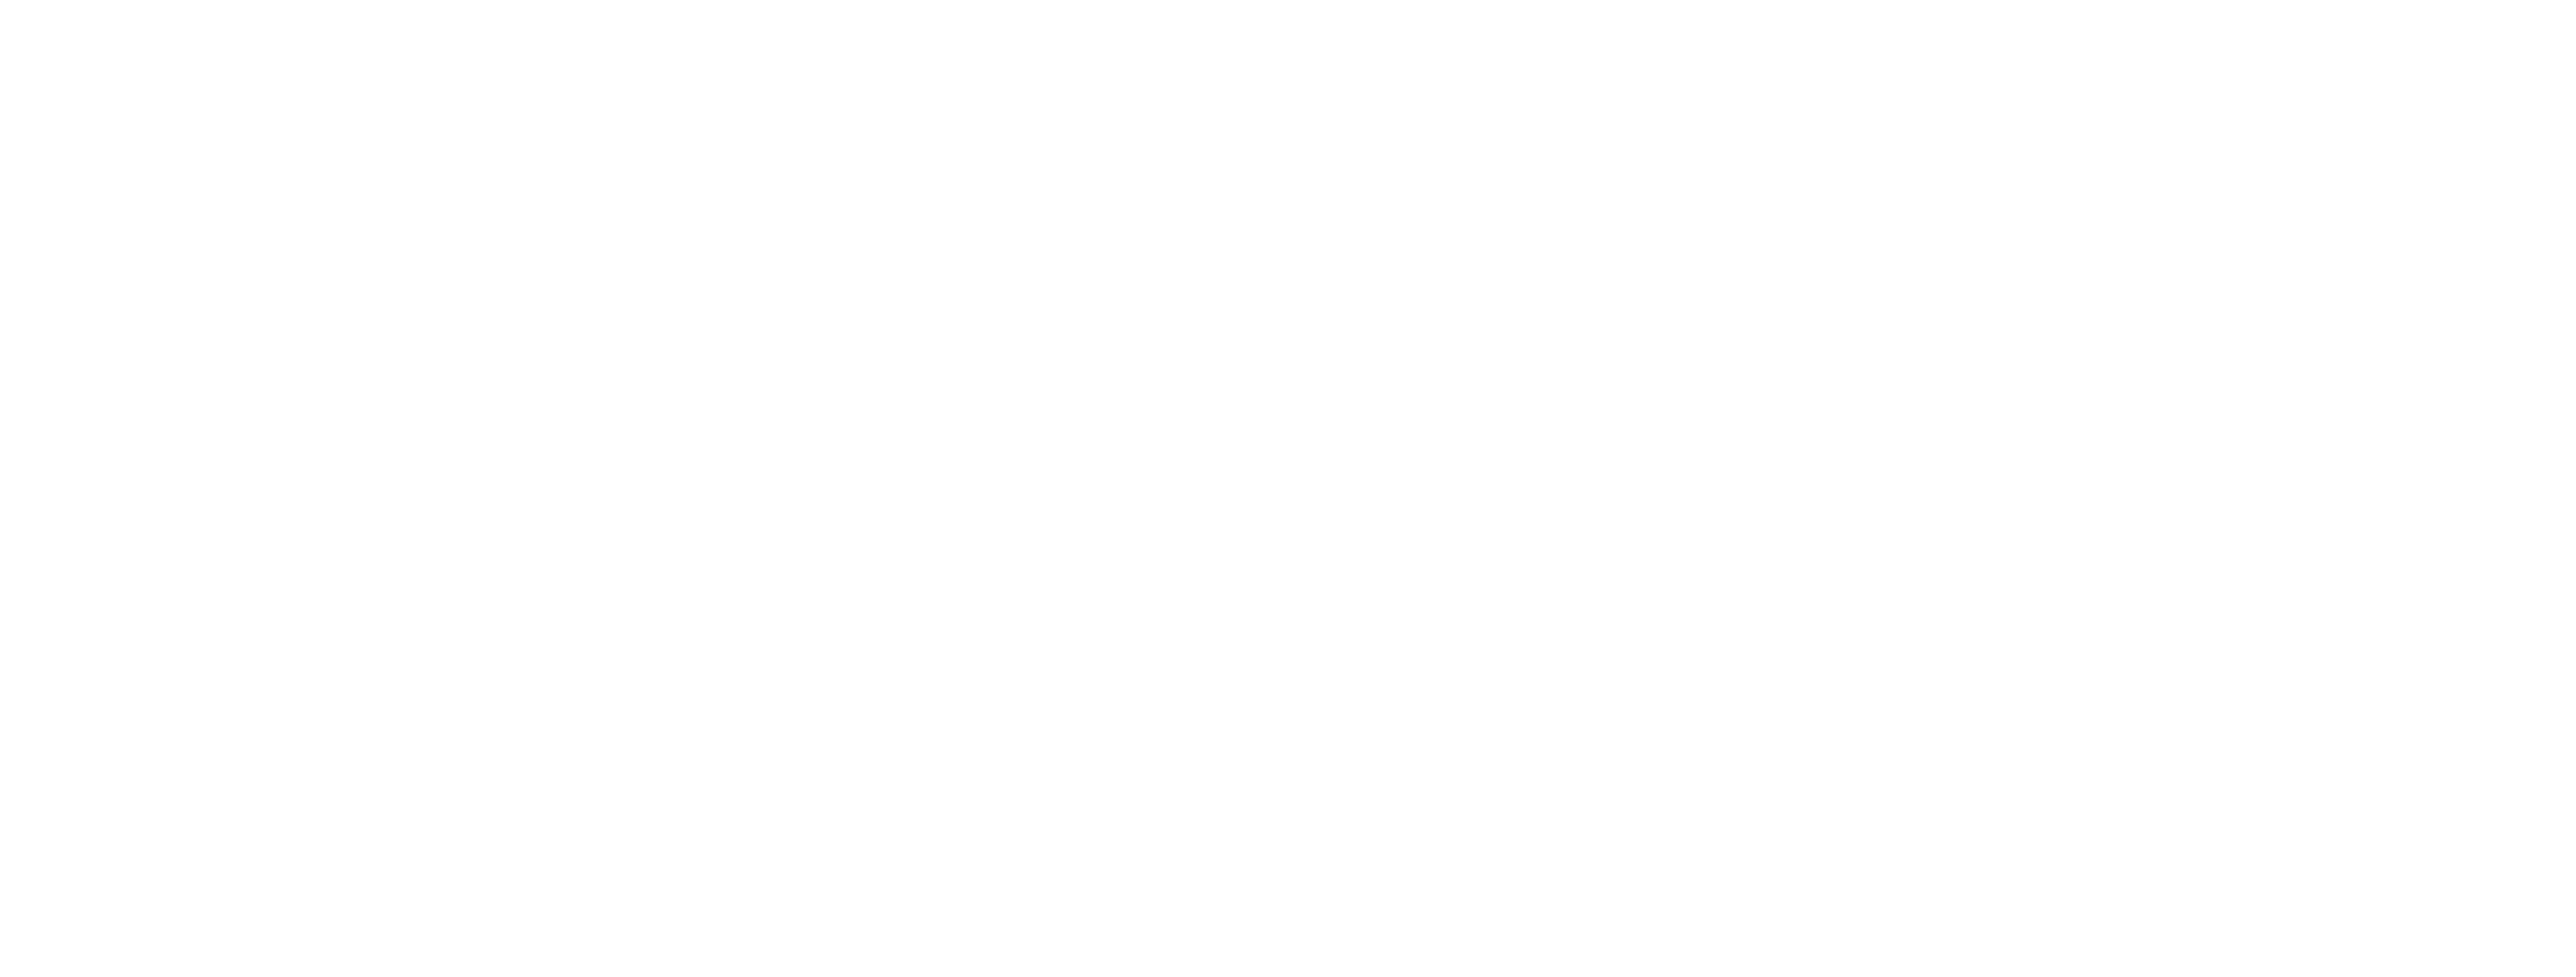 streaming volleyball world championship 2022